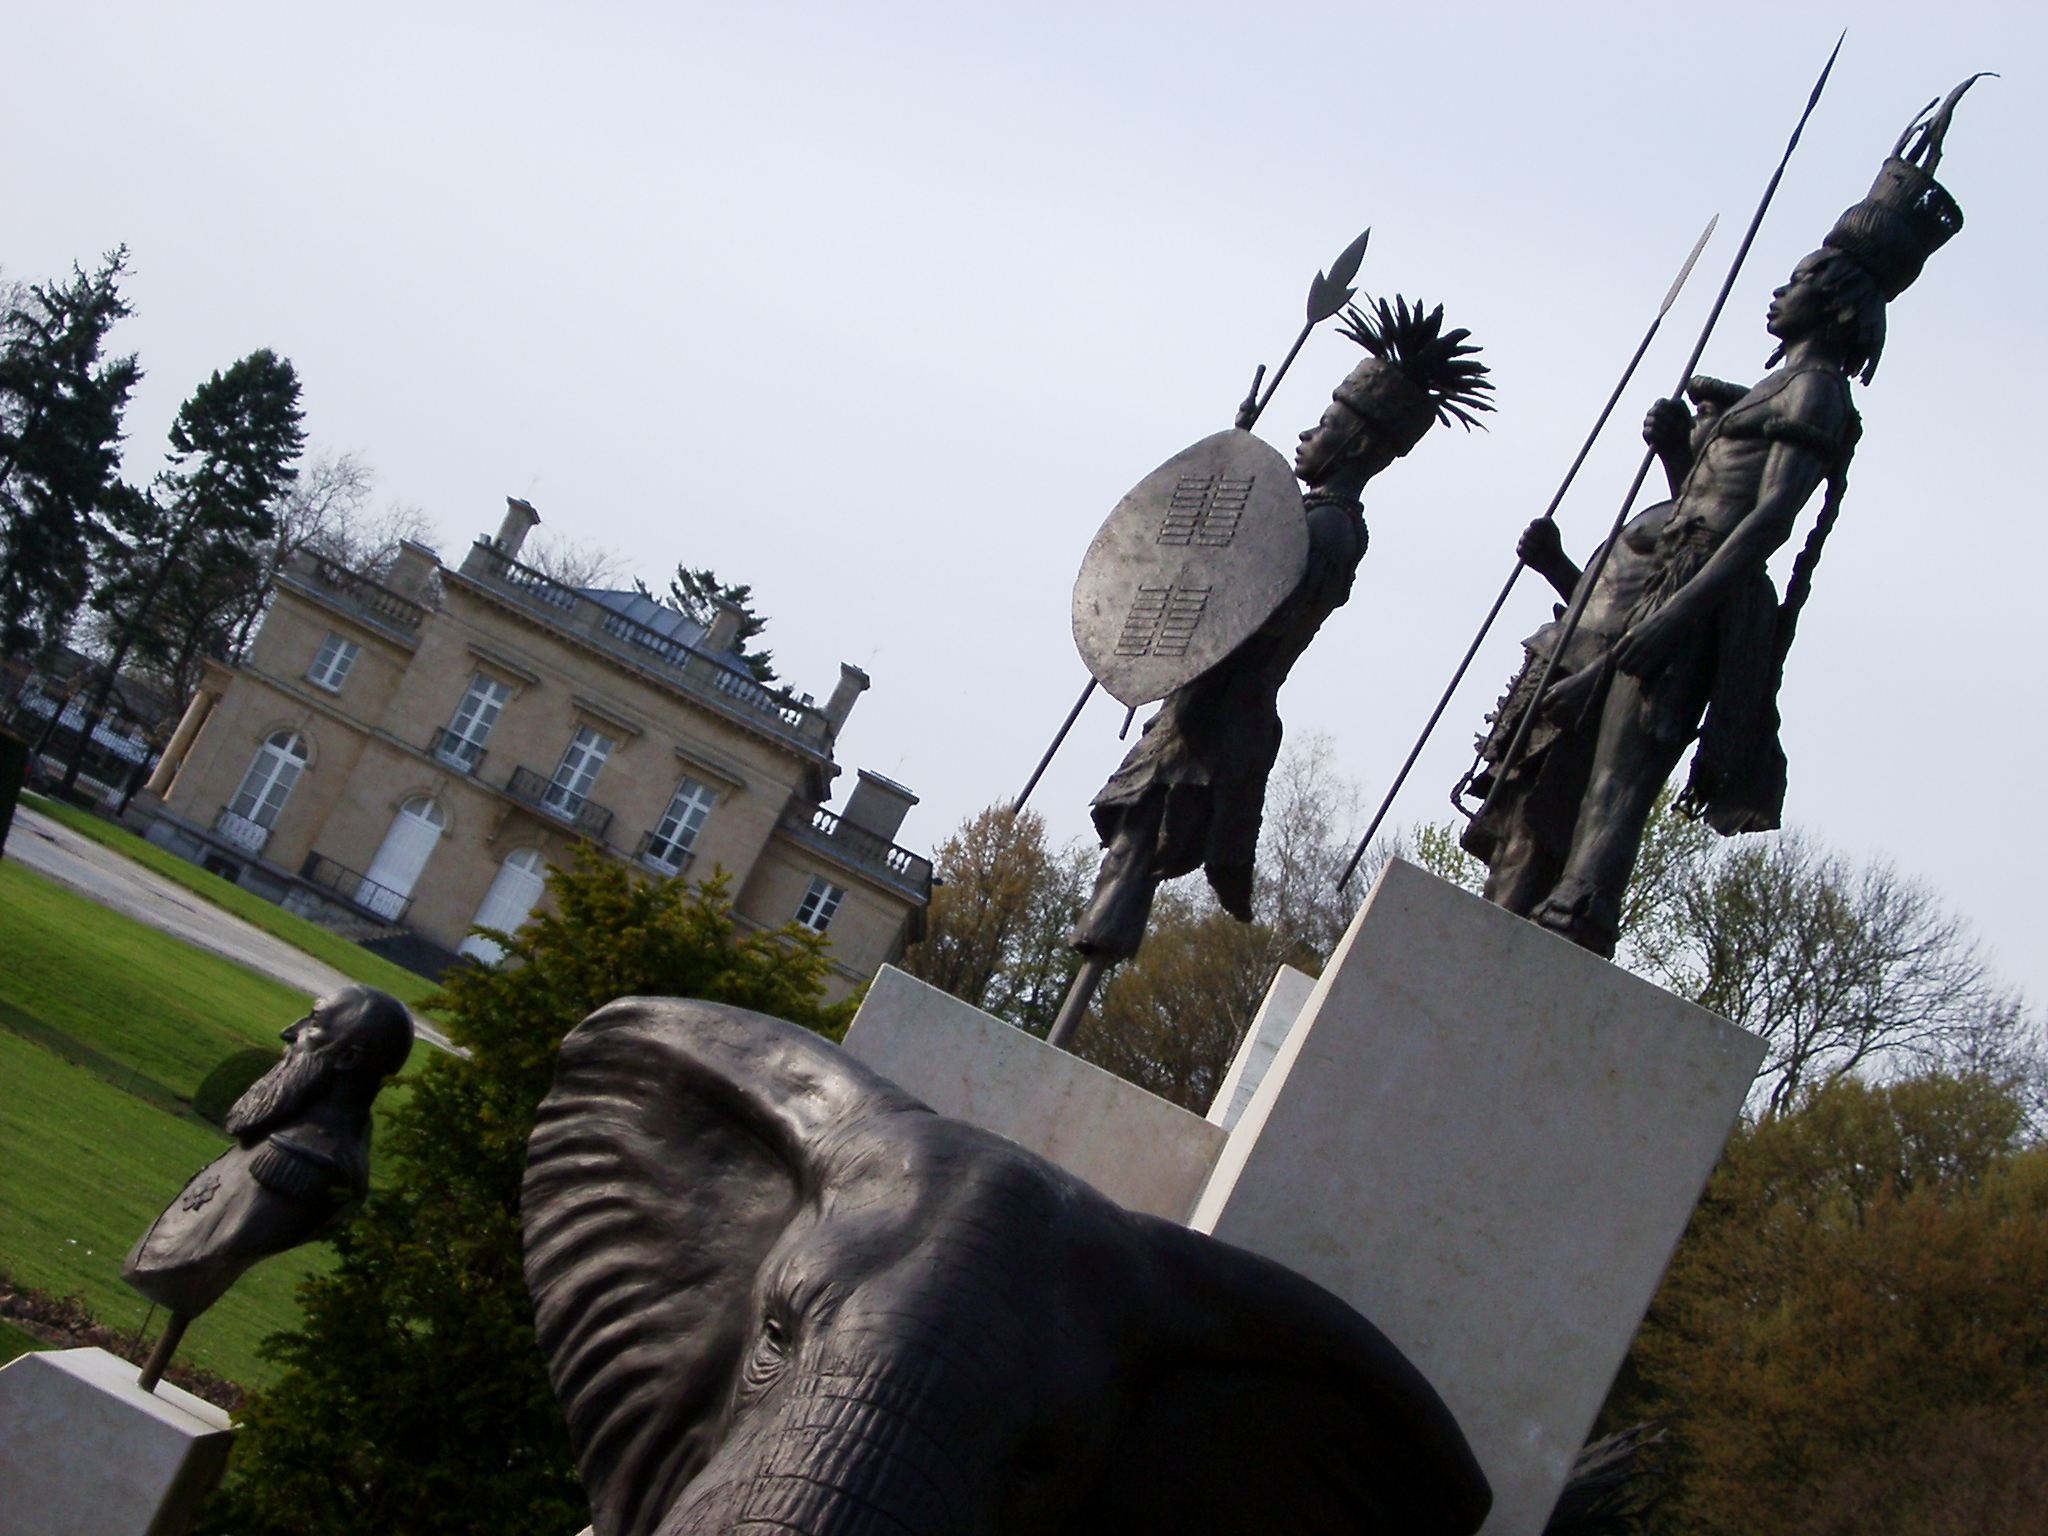 julien statue statues african warrior elephant bronze spears shields villa garden